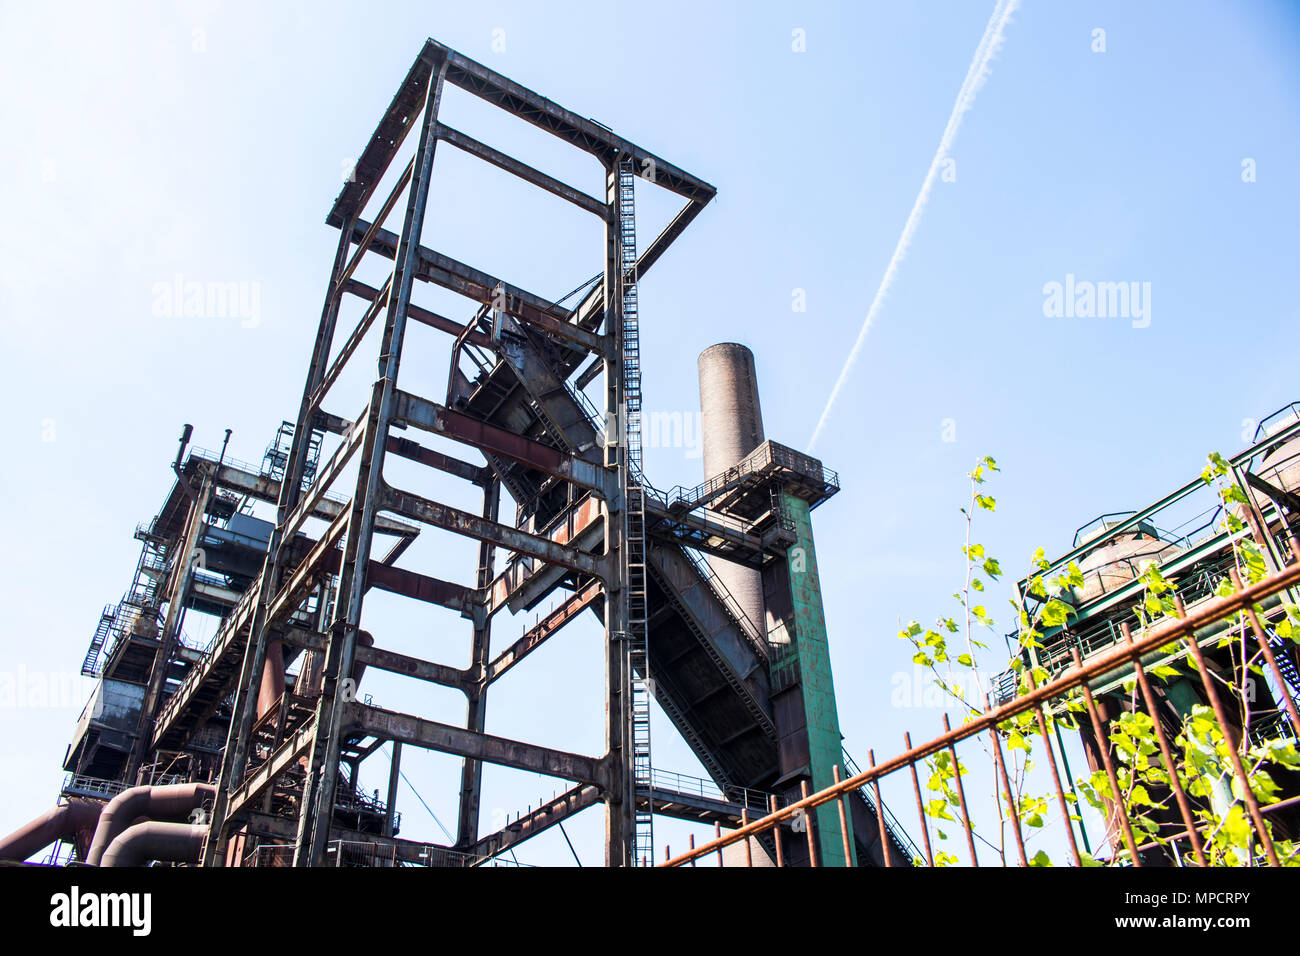 Rusty industrial steel constructions Stock Photo